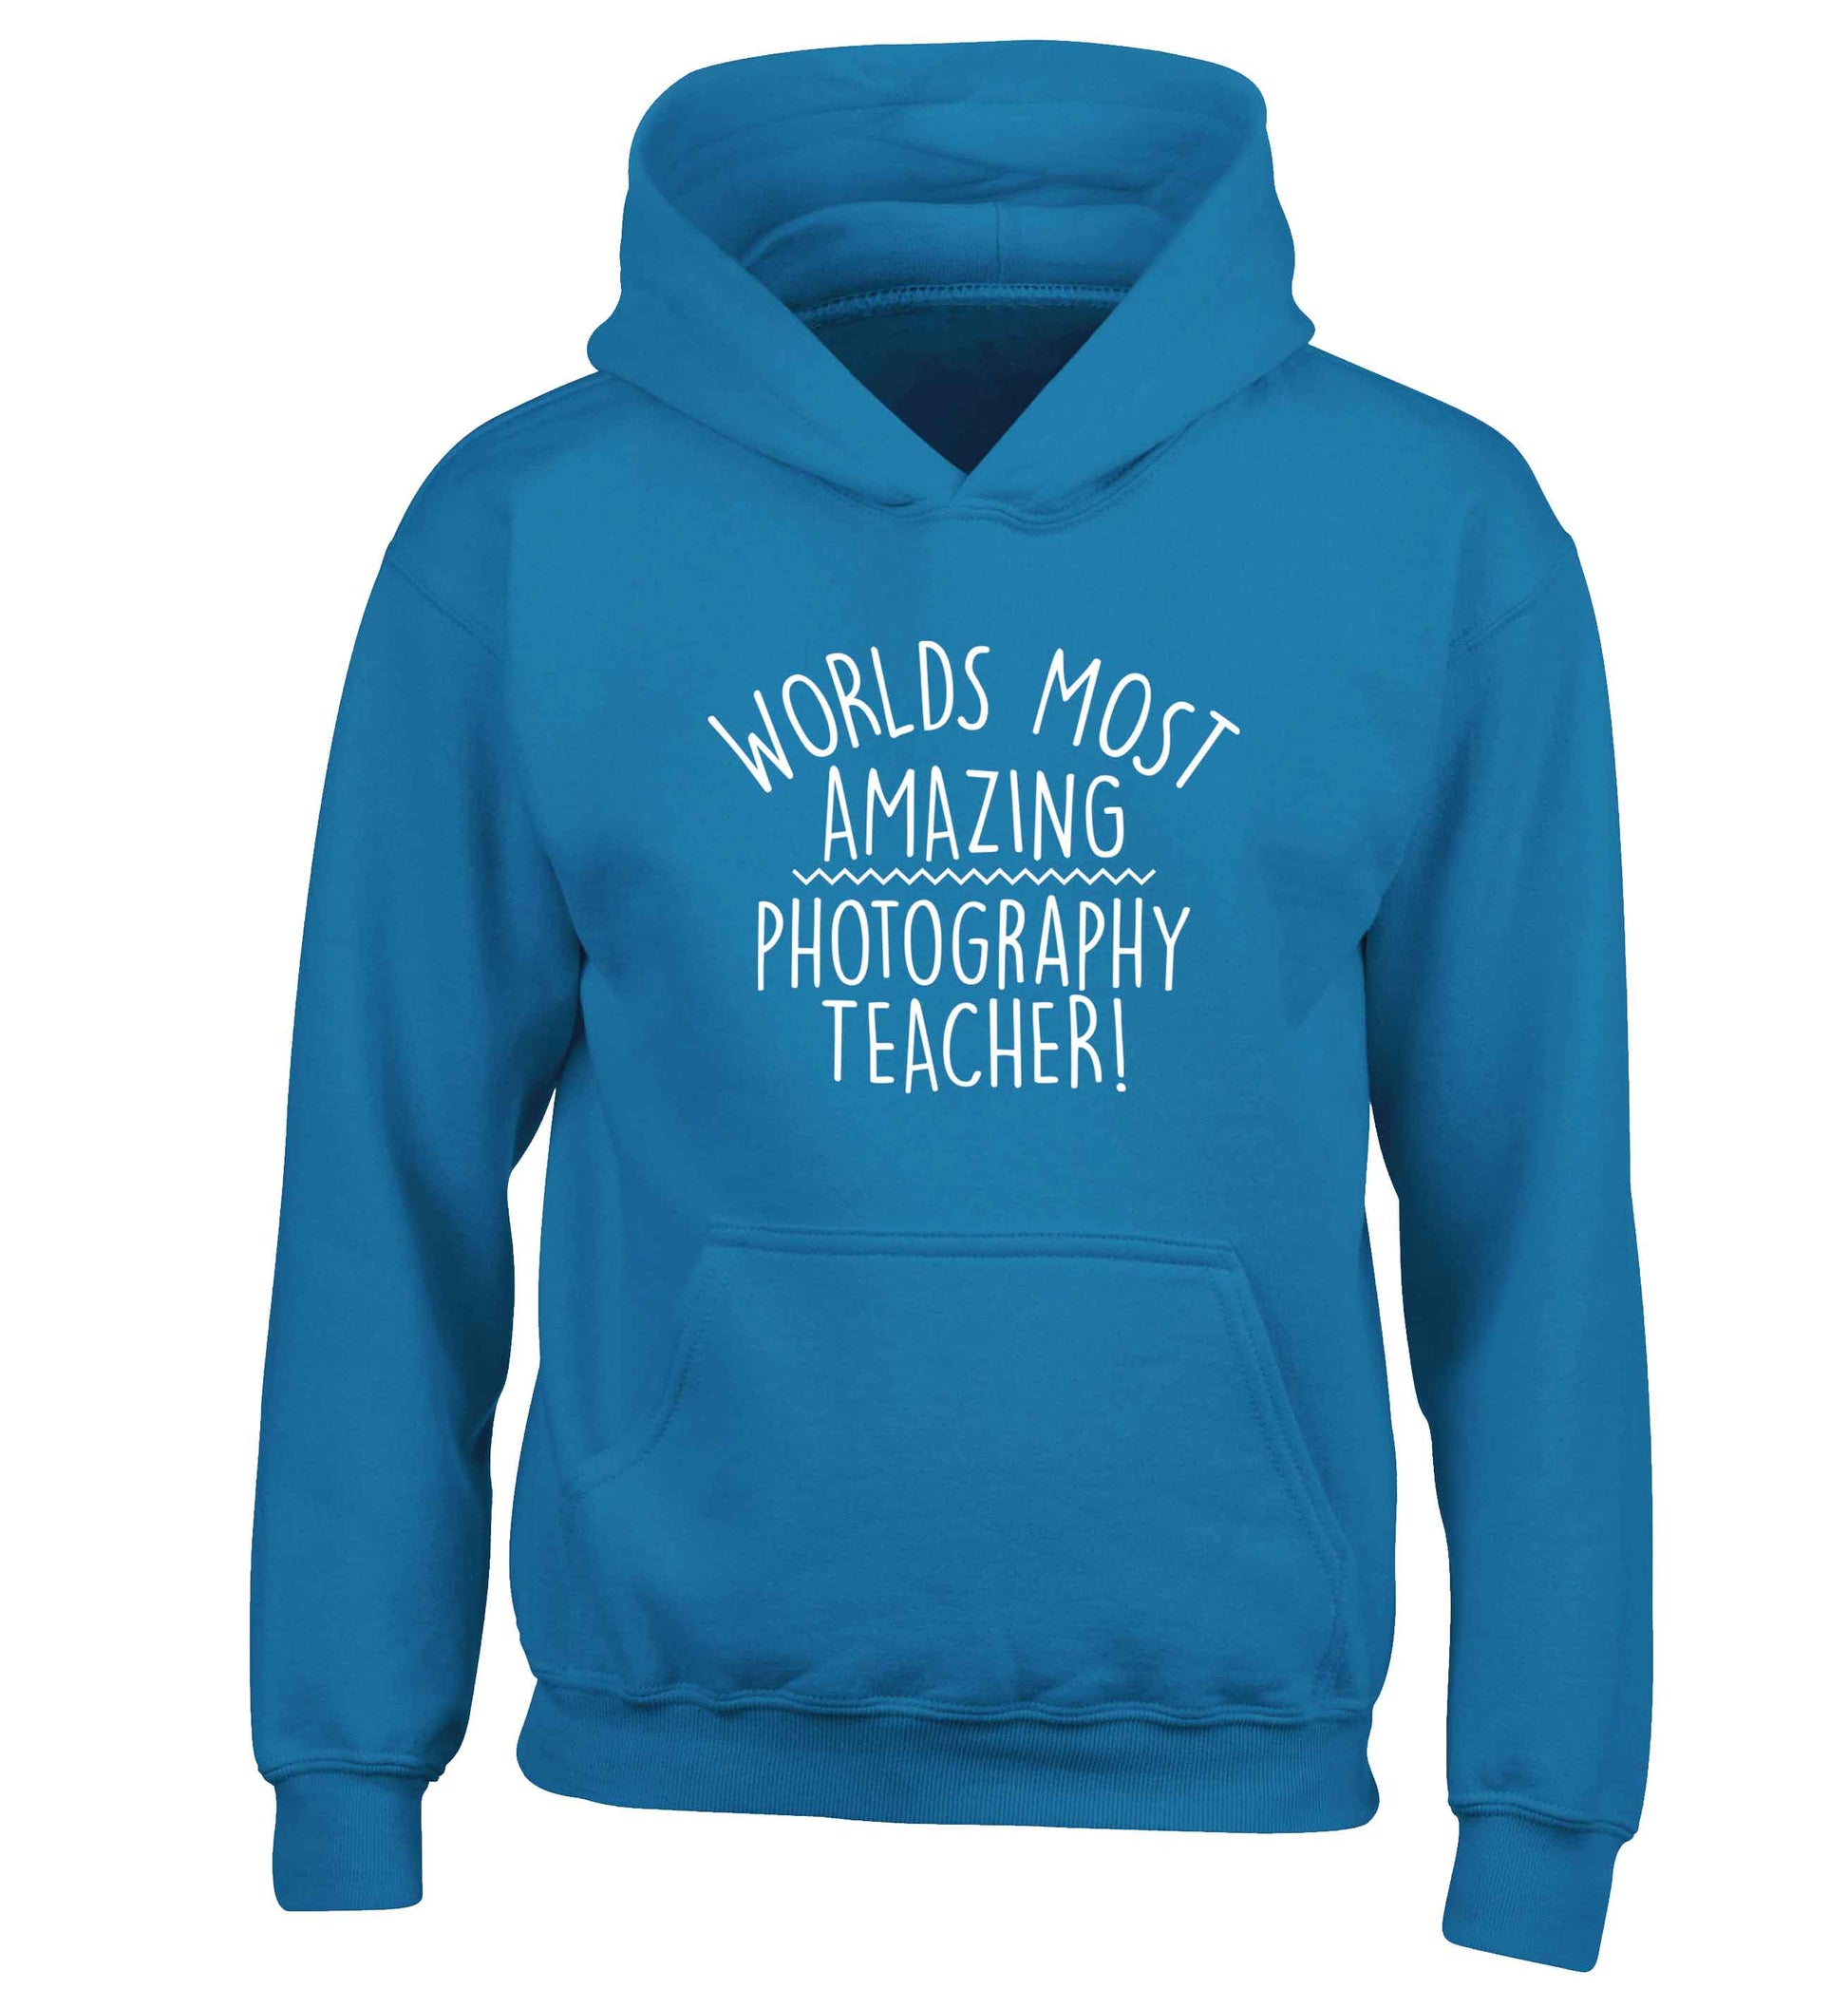 Worlds most amazing photography teacher children's blue hoodie 12-13 Years